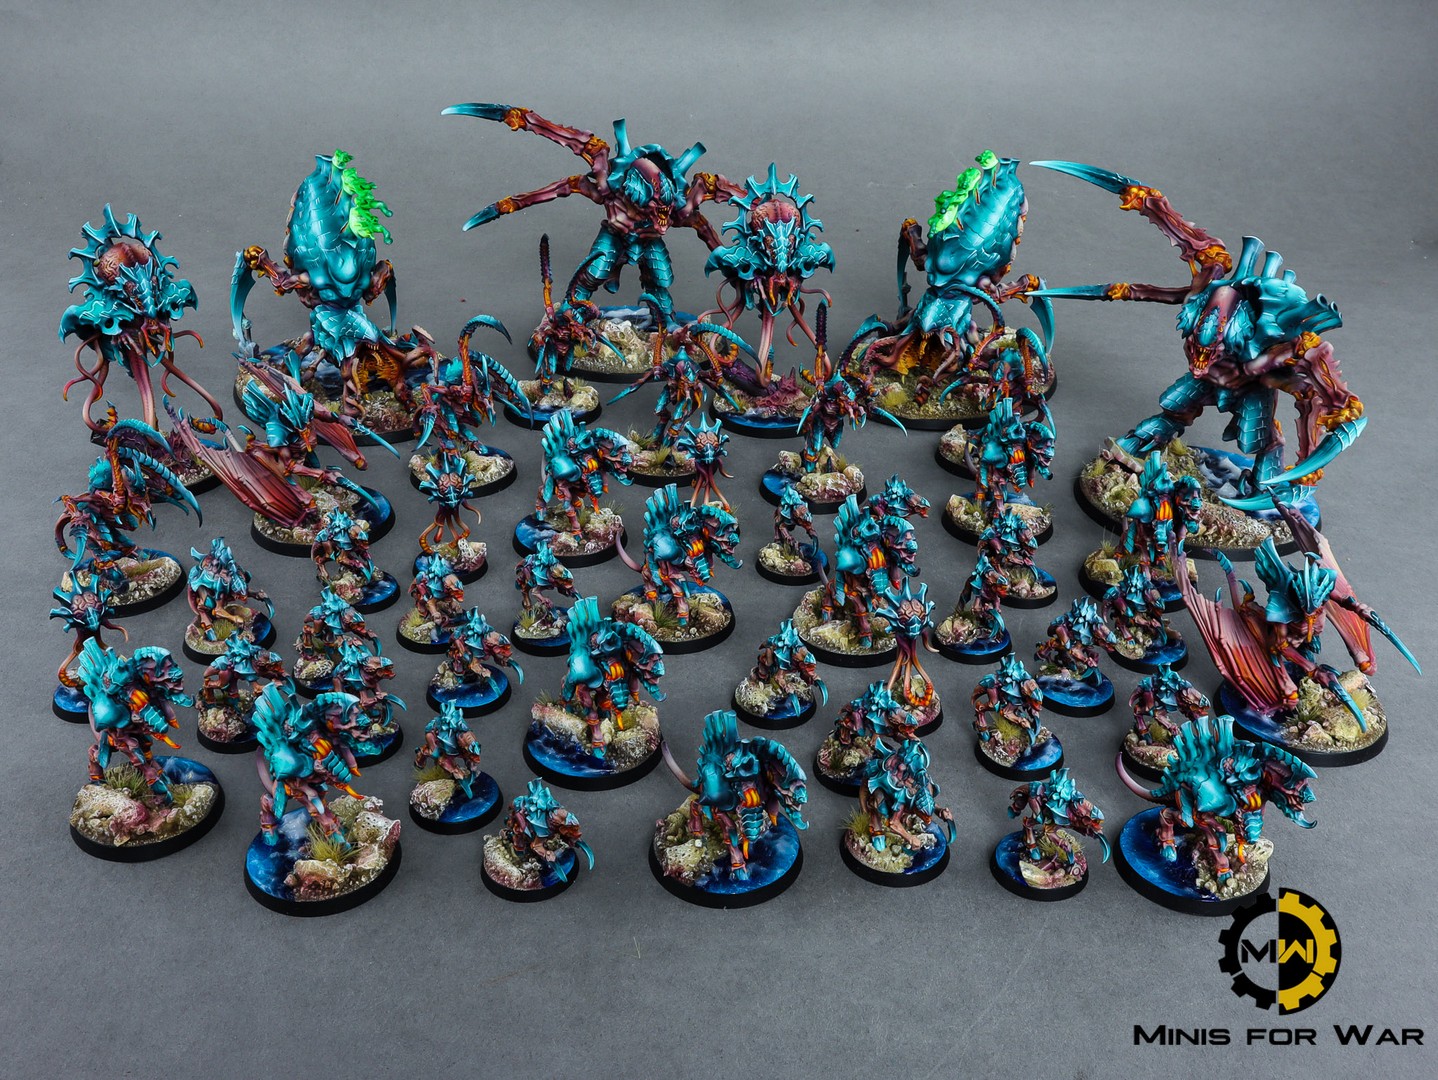 Sea tyranid leviathan army